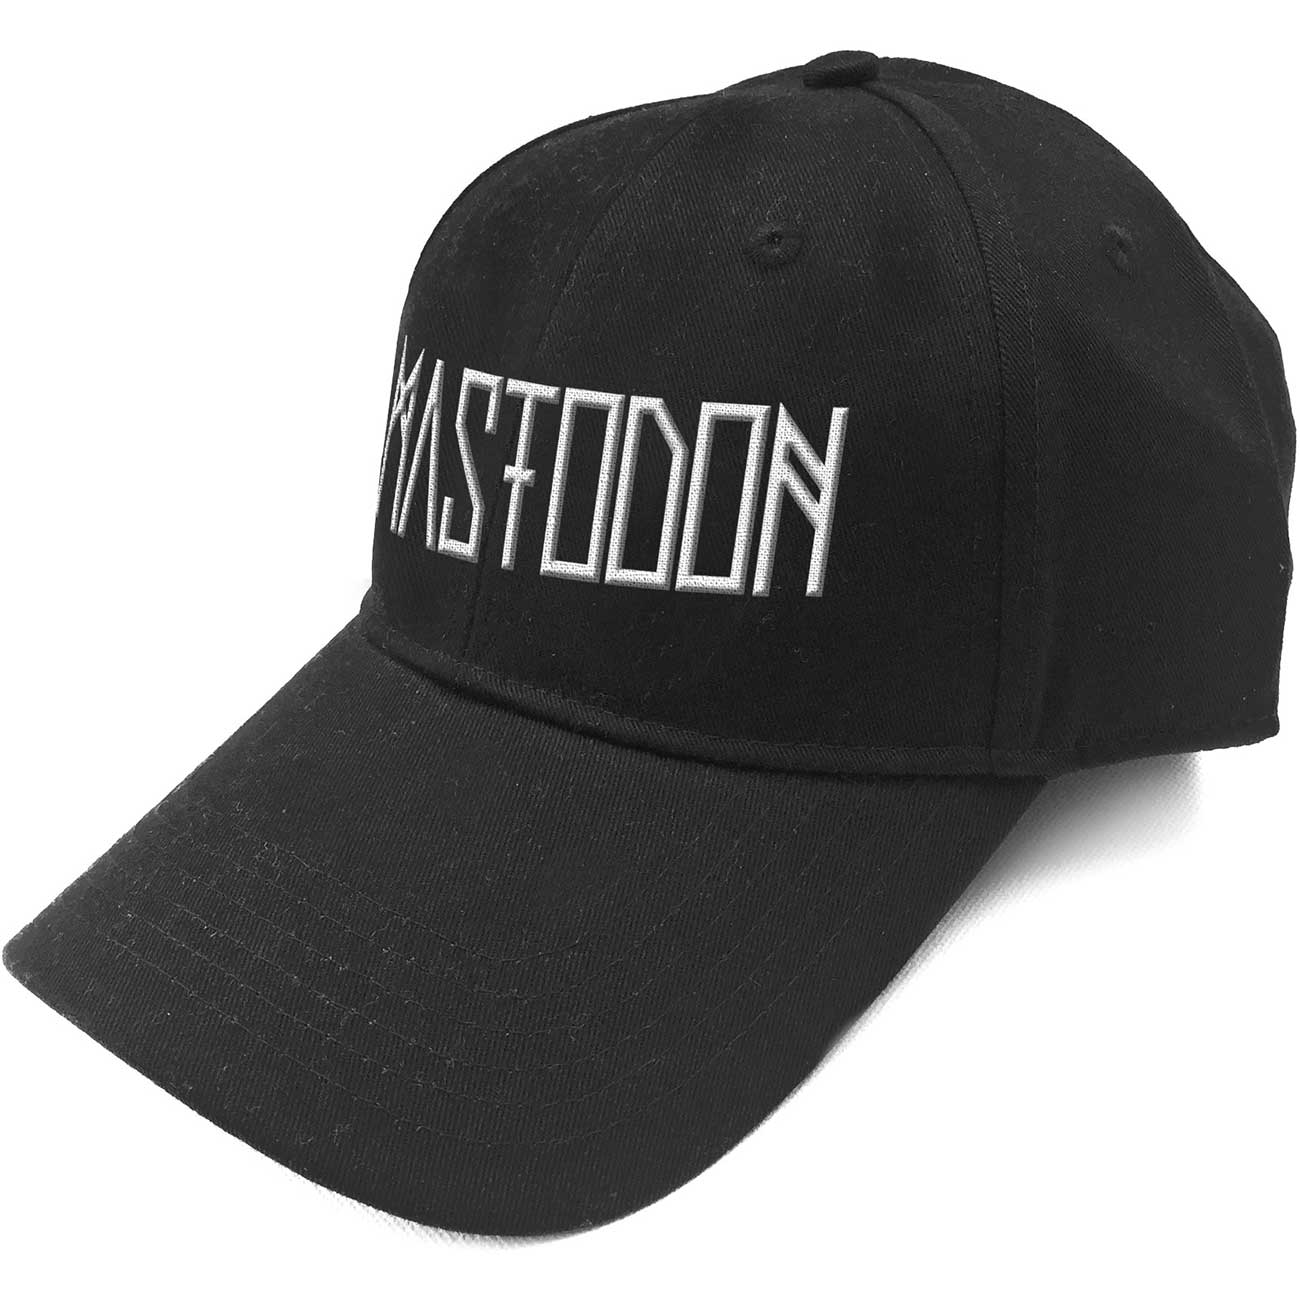 Mastodon Baseball Cap: Logo